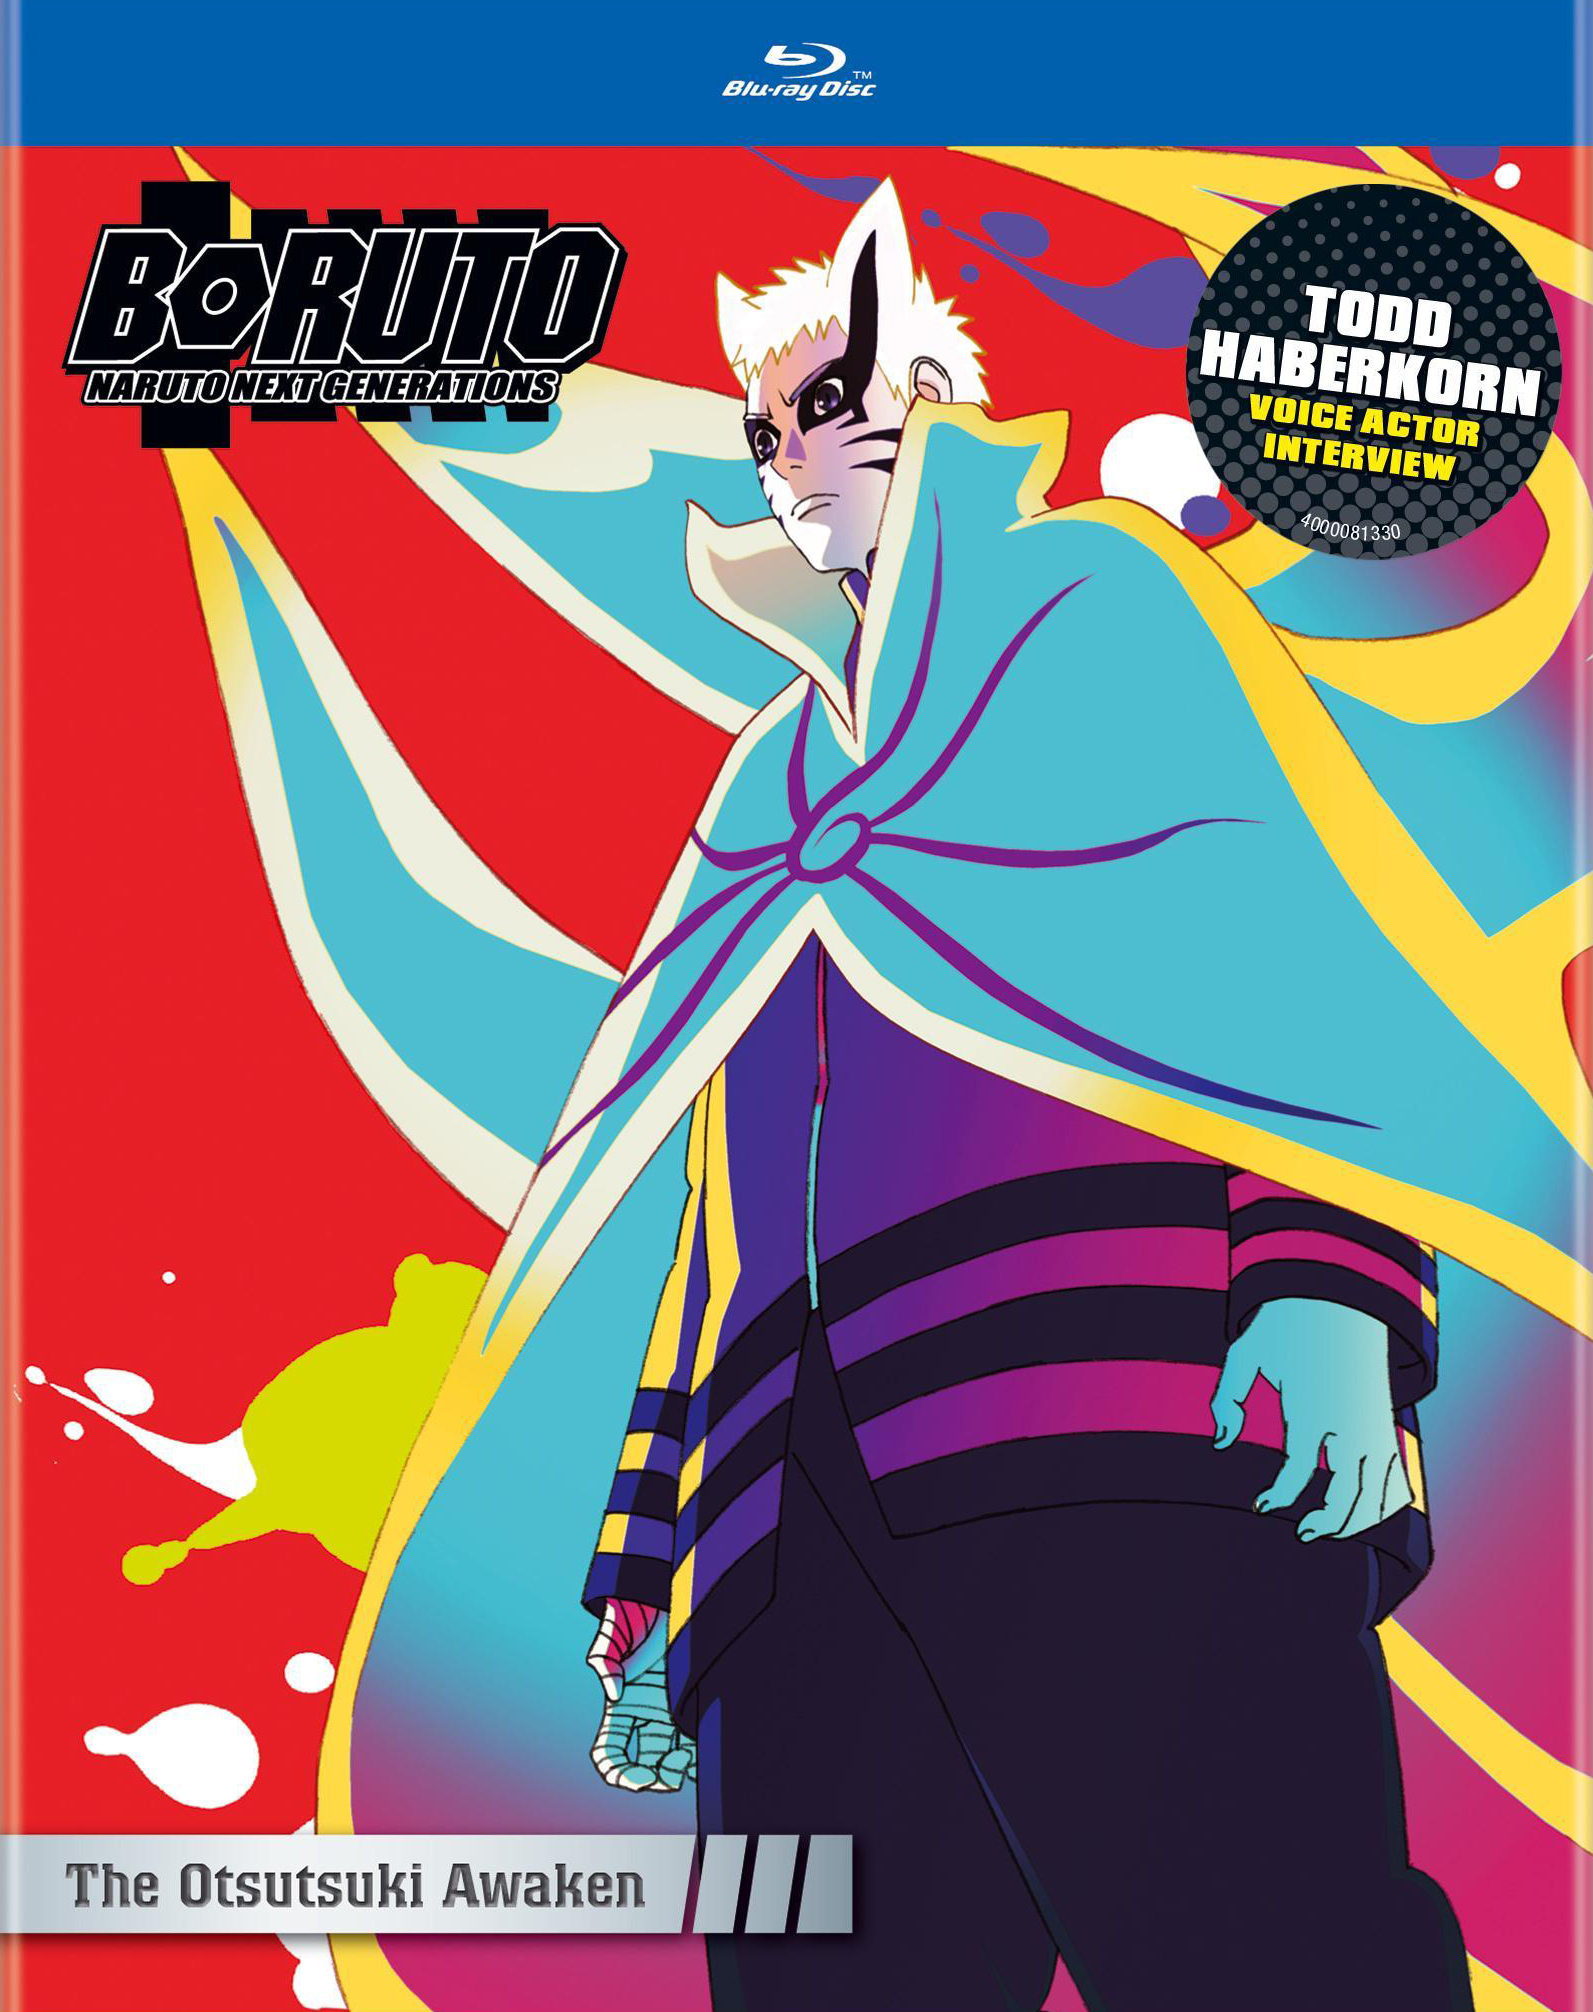 New Dubbed BORUTO: NARUTO NEXT GENERATIONS Episodes Arrive on Blu-ray!